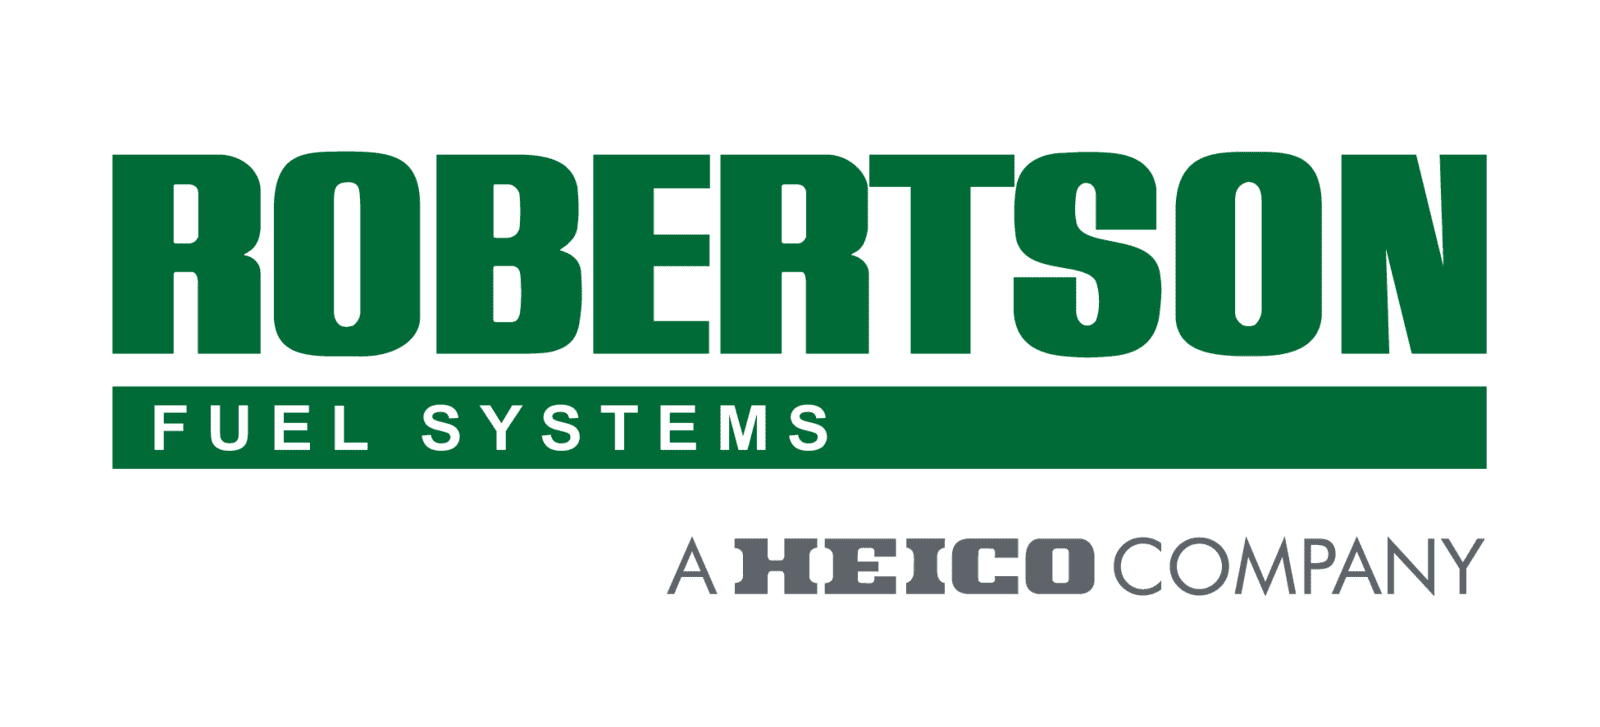 Robertson Fuel Systems Logo